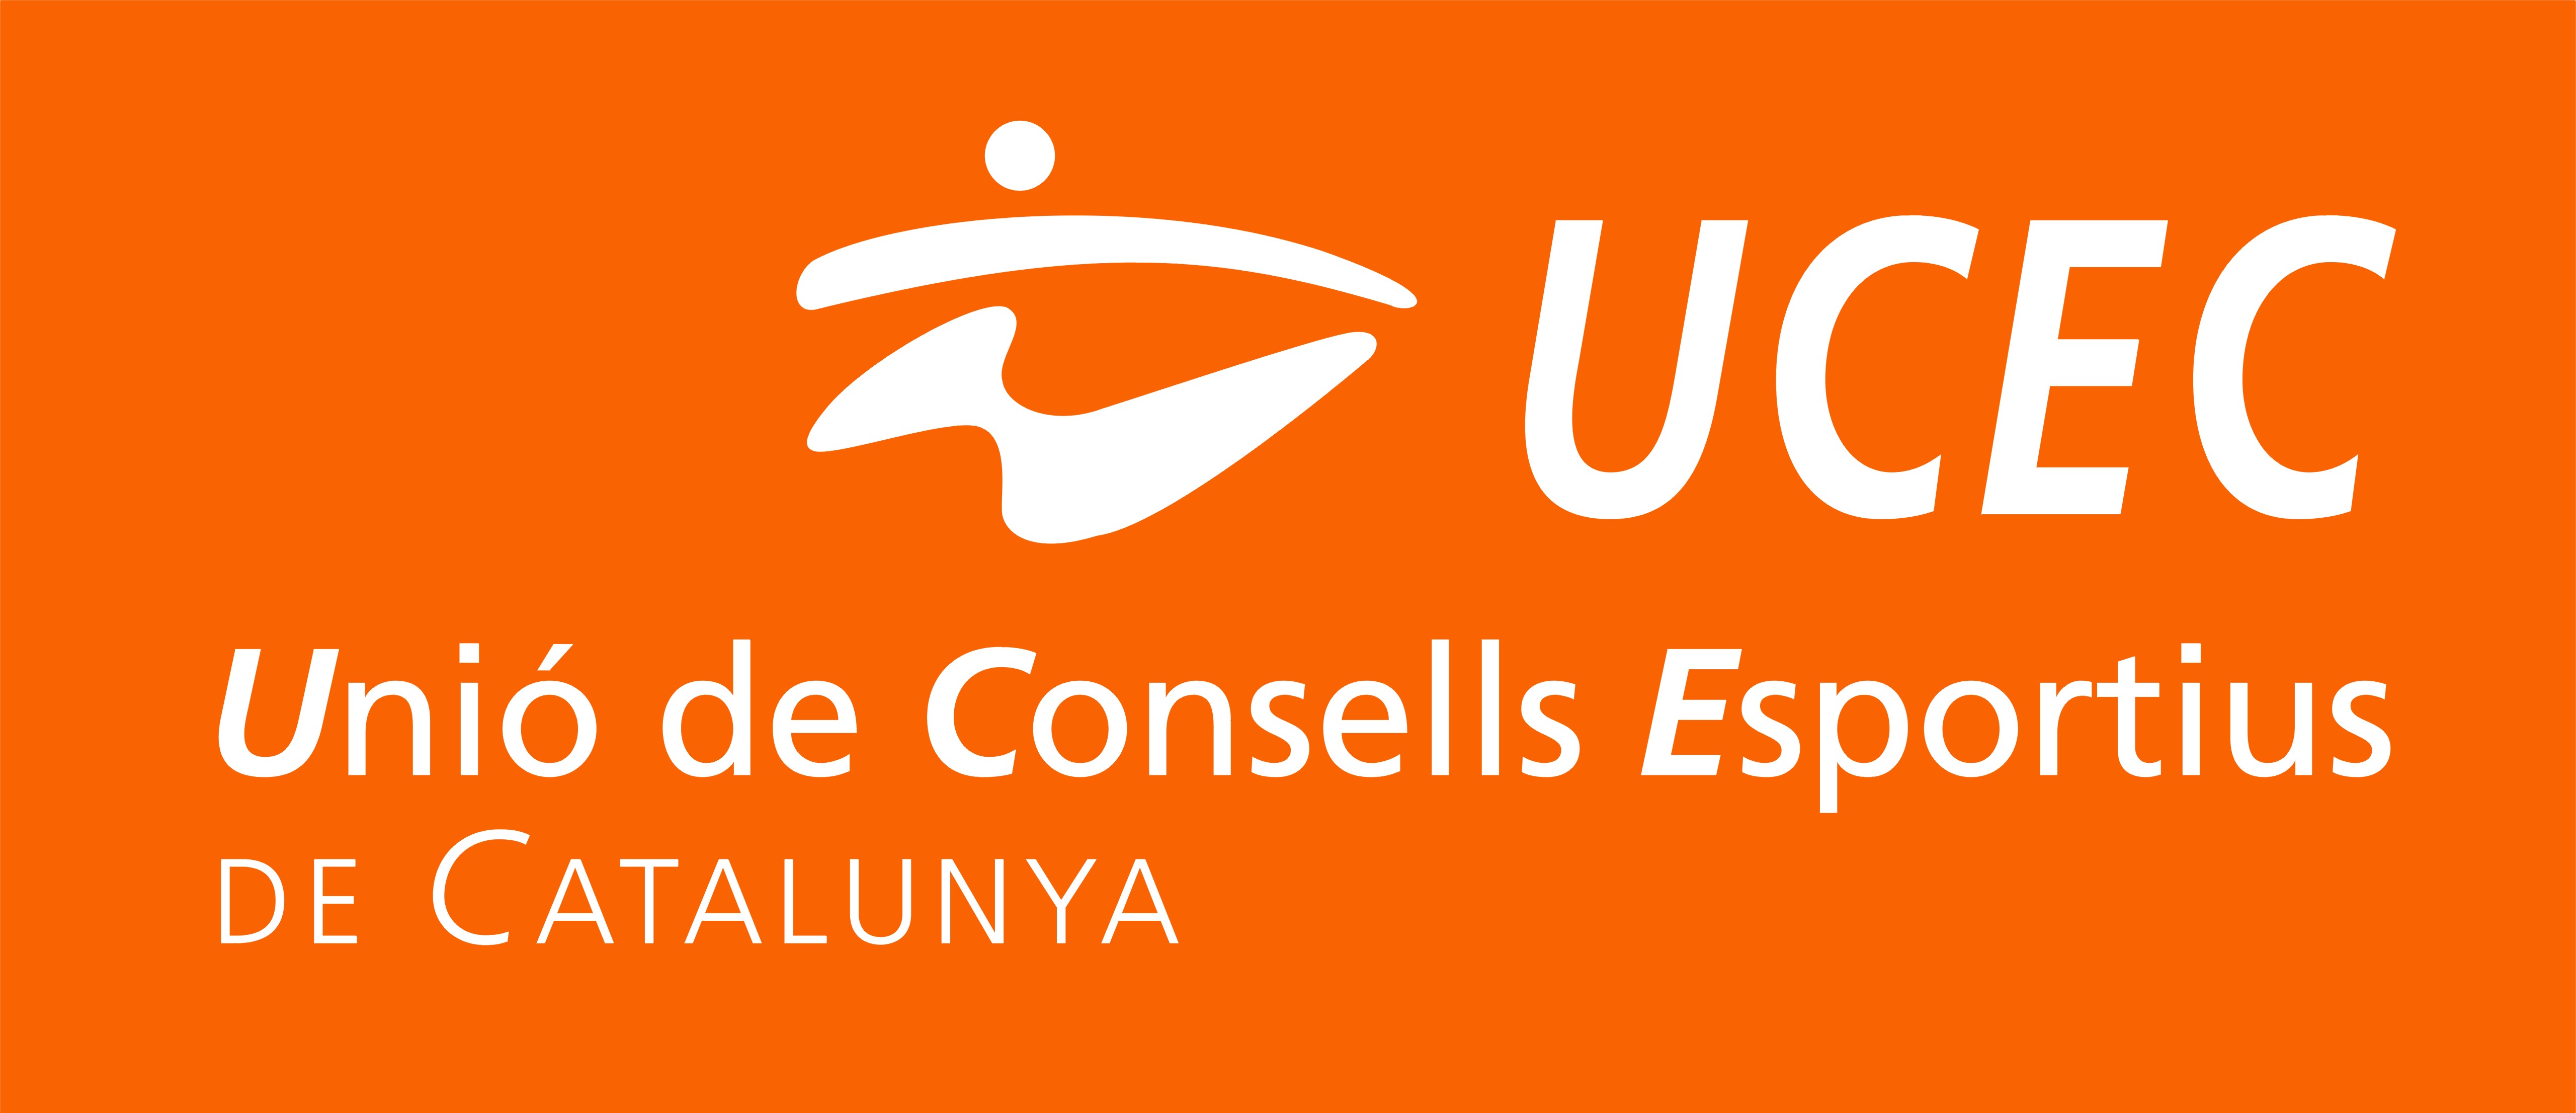 Logotip UCEC